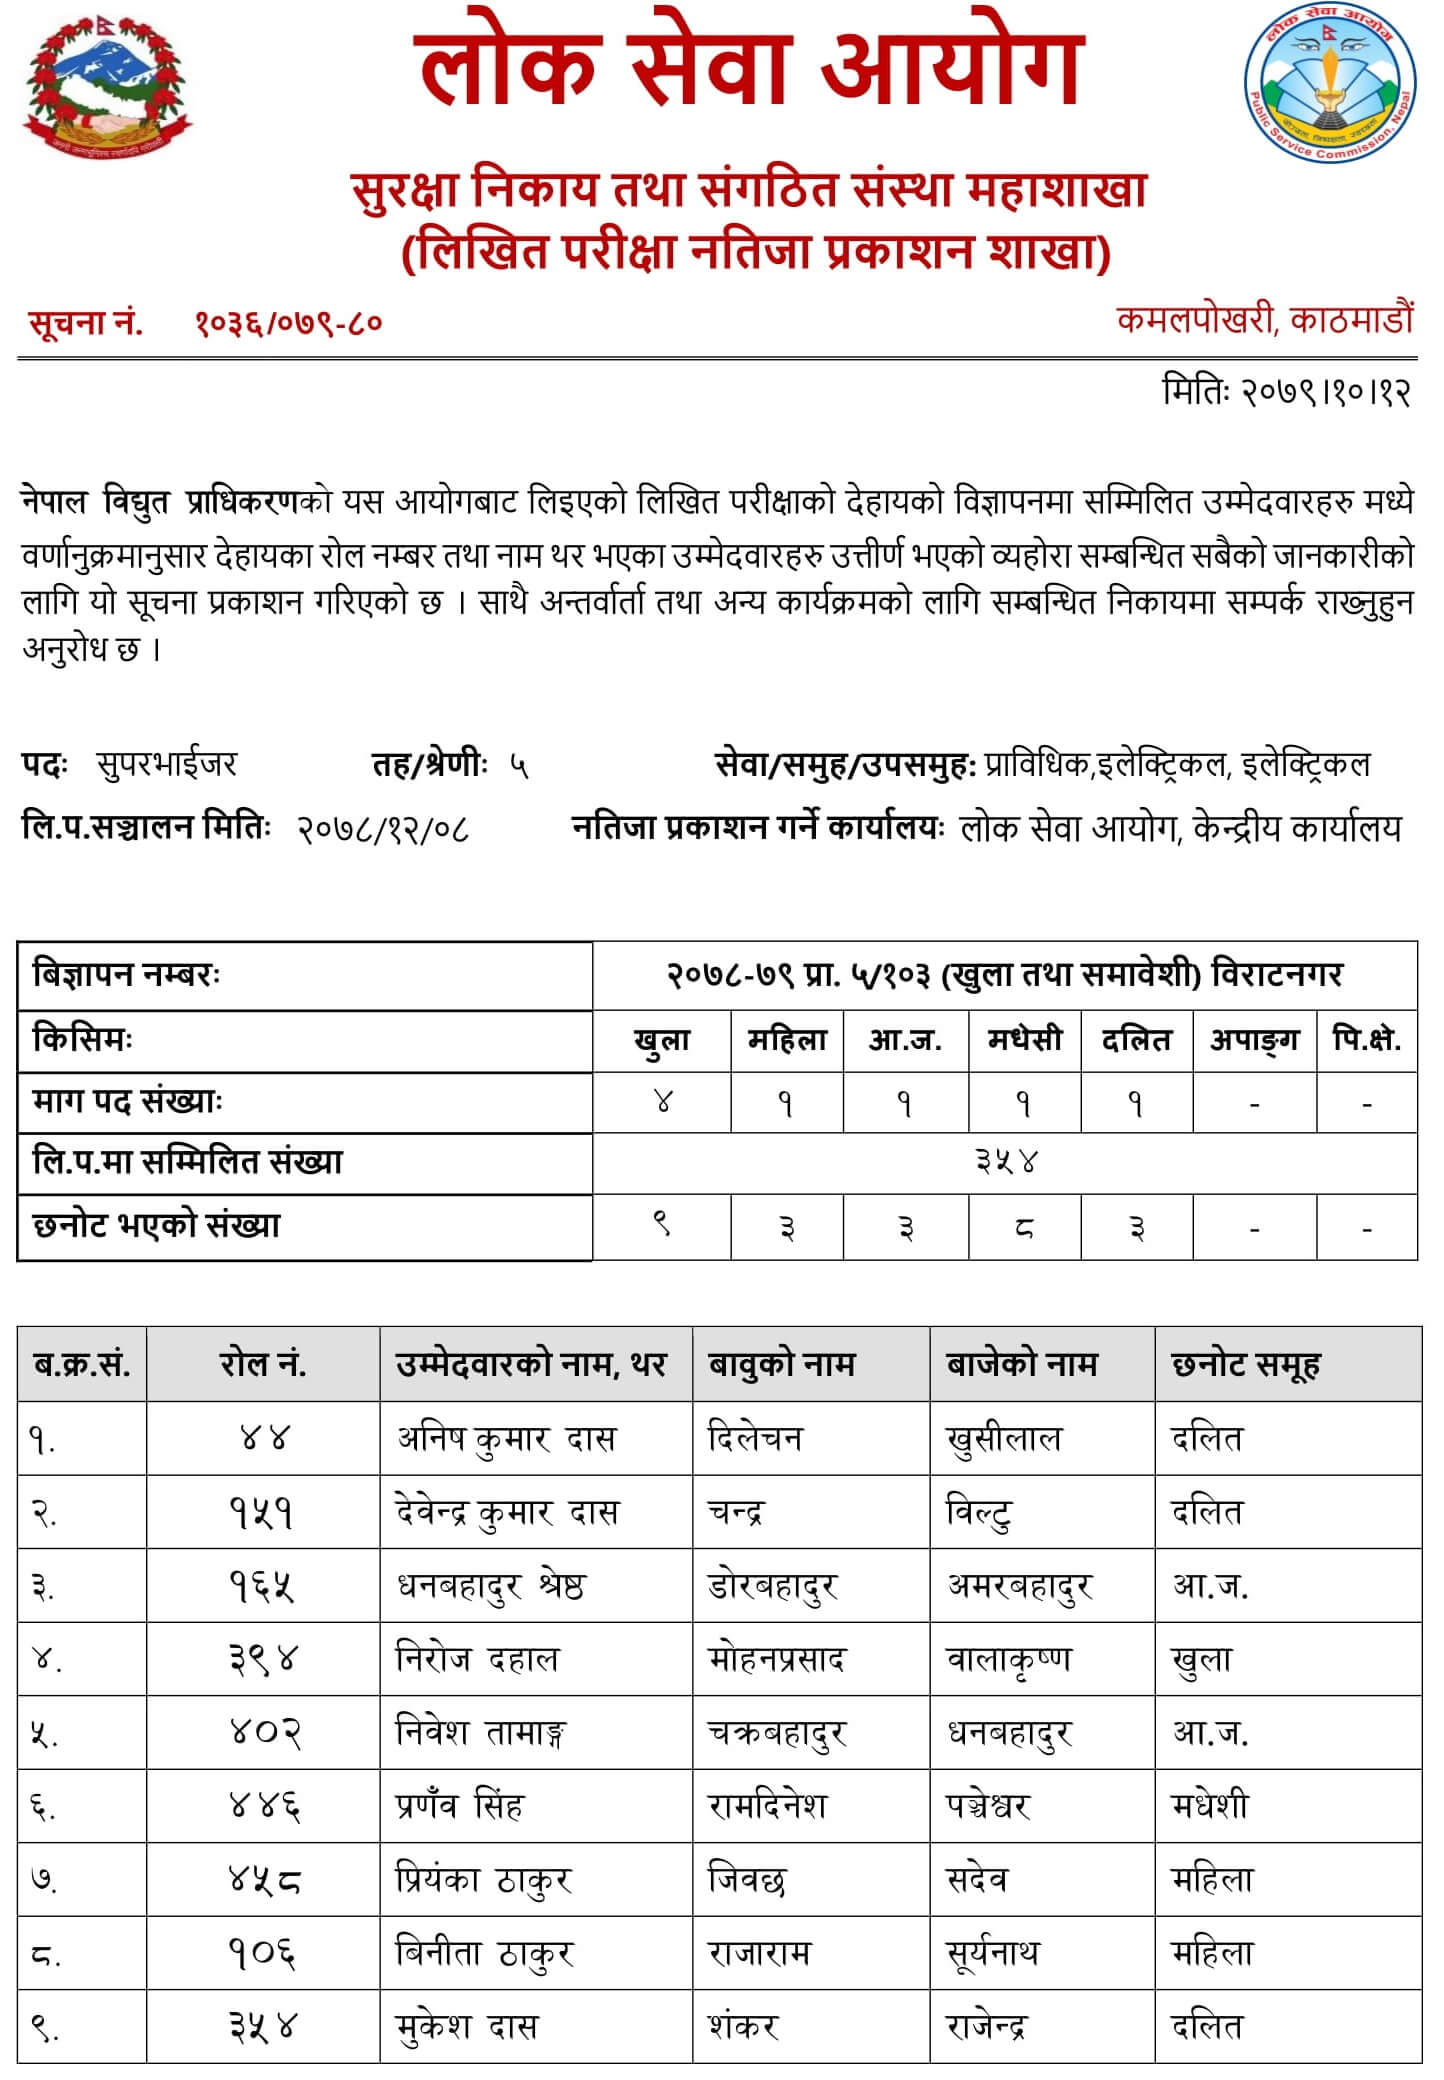 Nepal Electricity Authority (NEA) Supervisor Electrical Exam Result